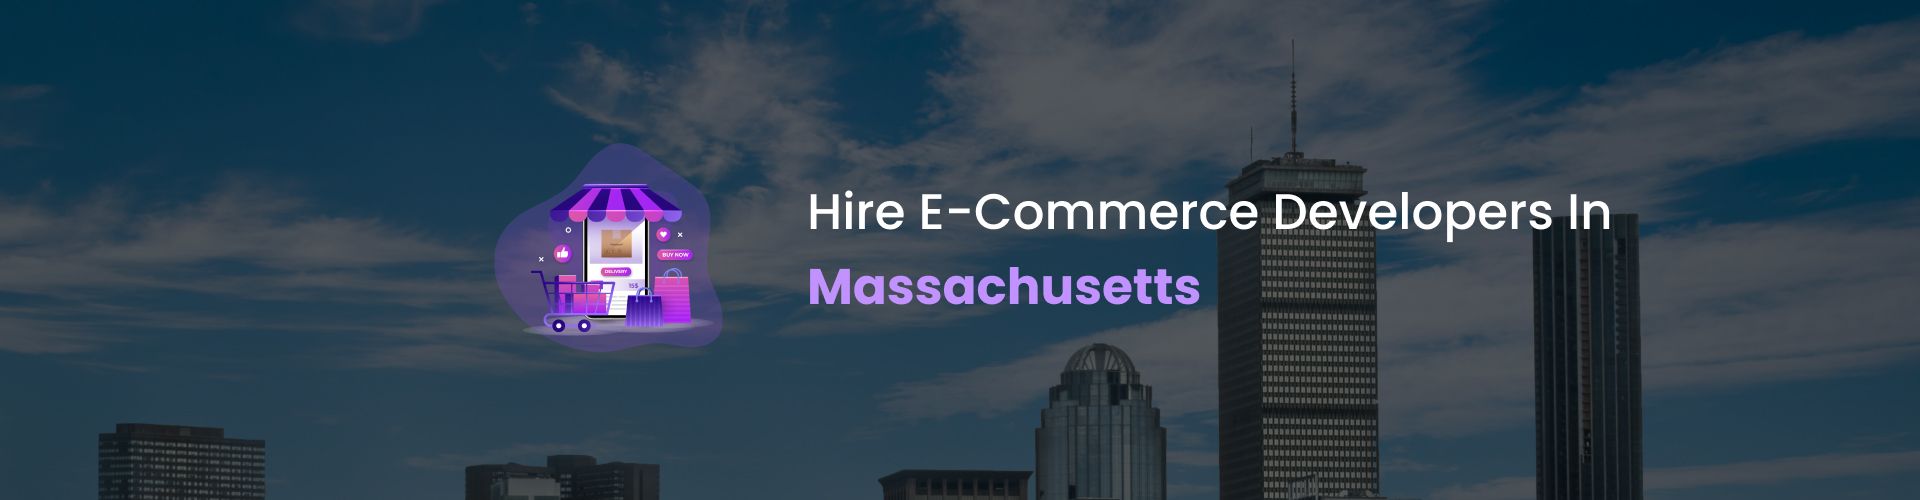 hire ecommerce developers in massachusetts